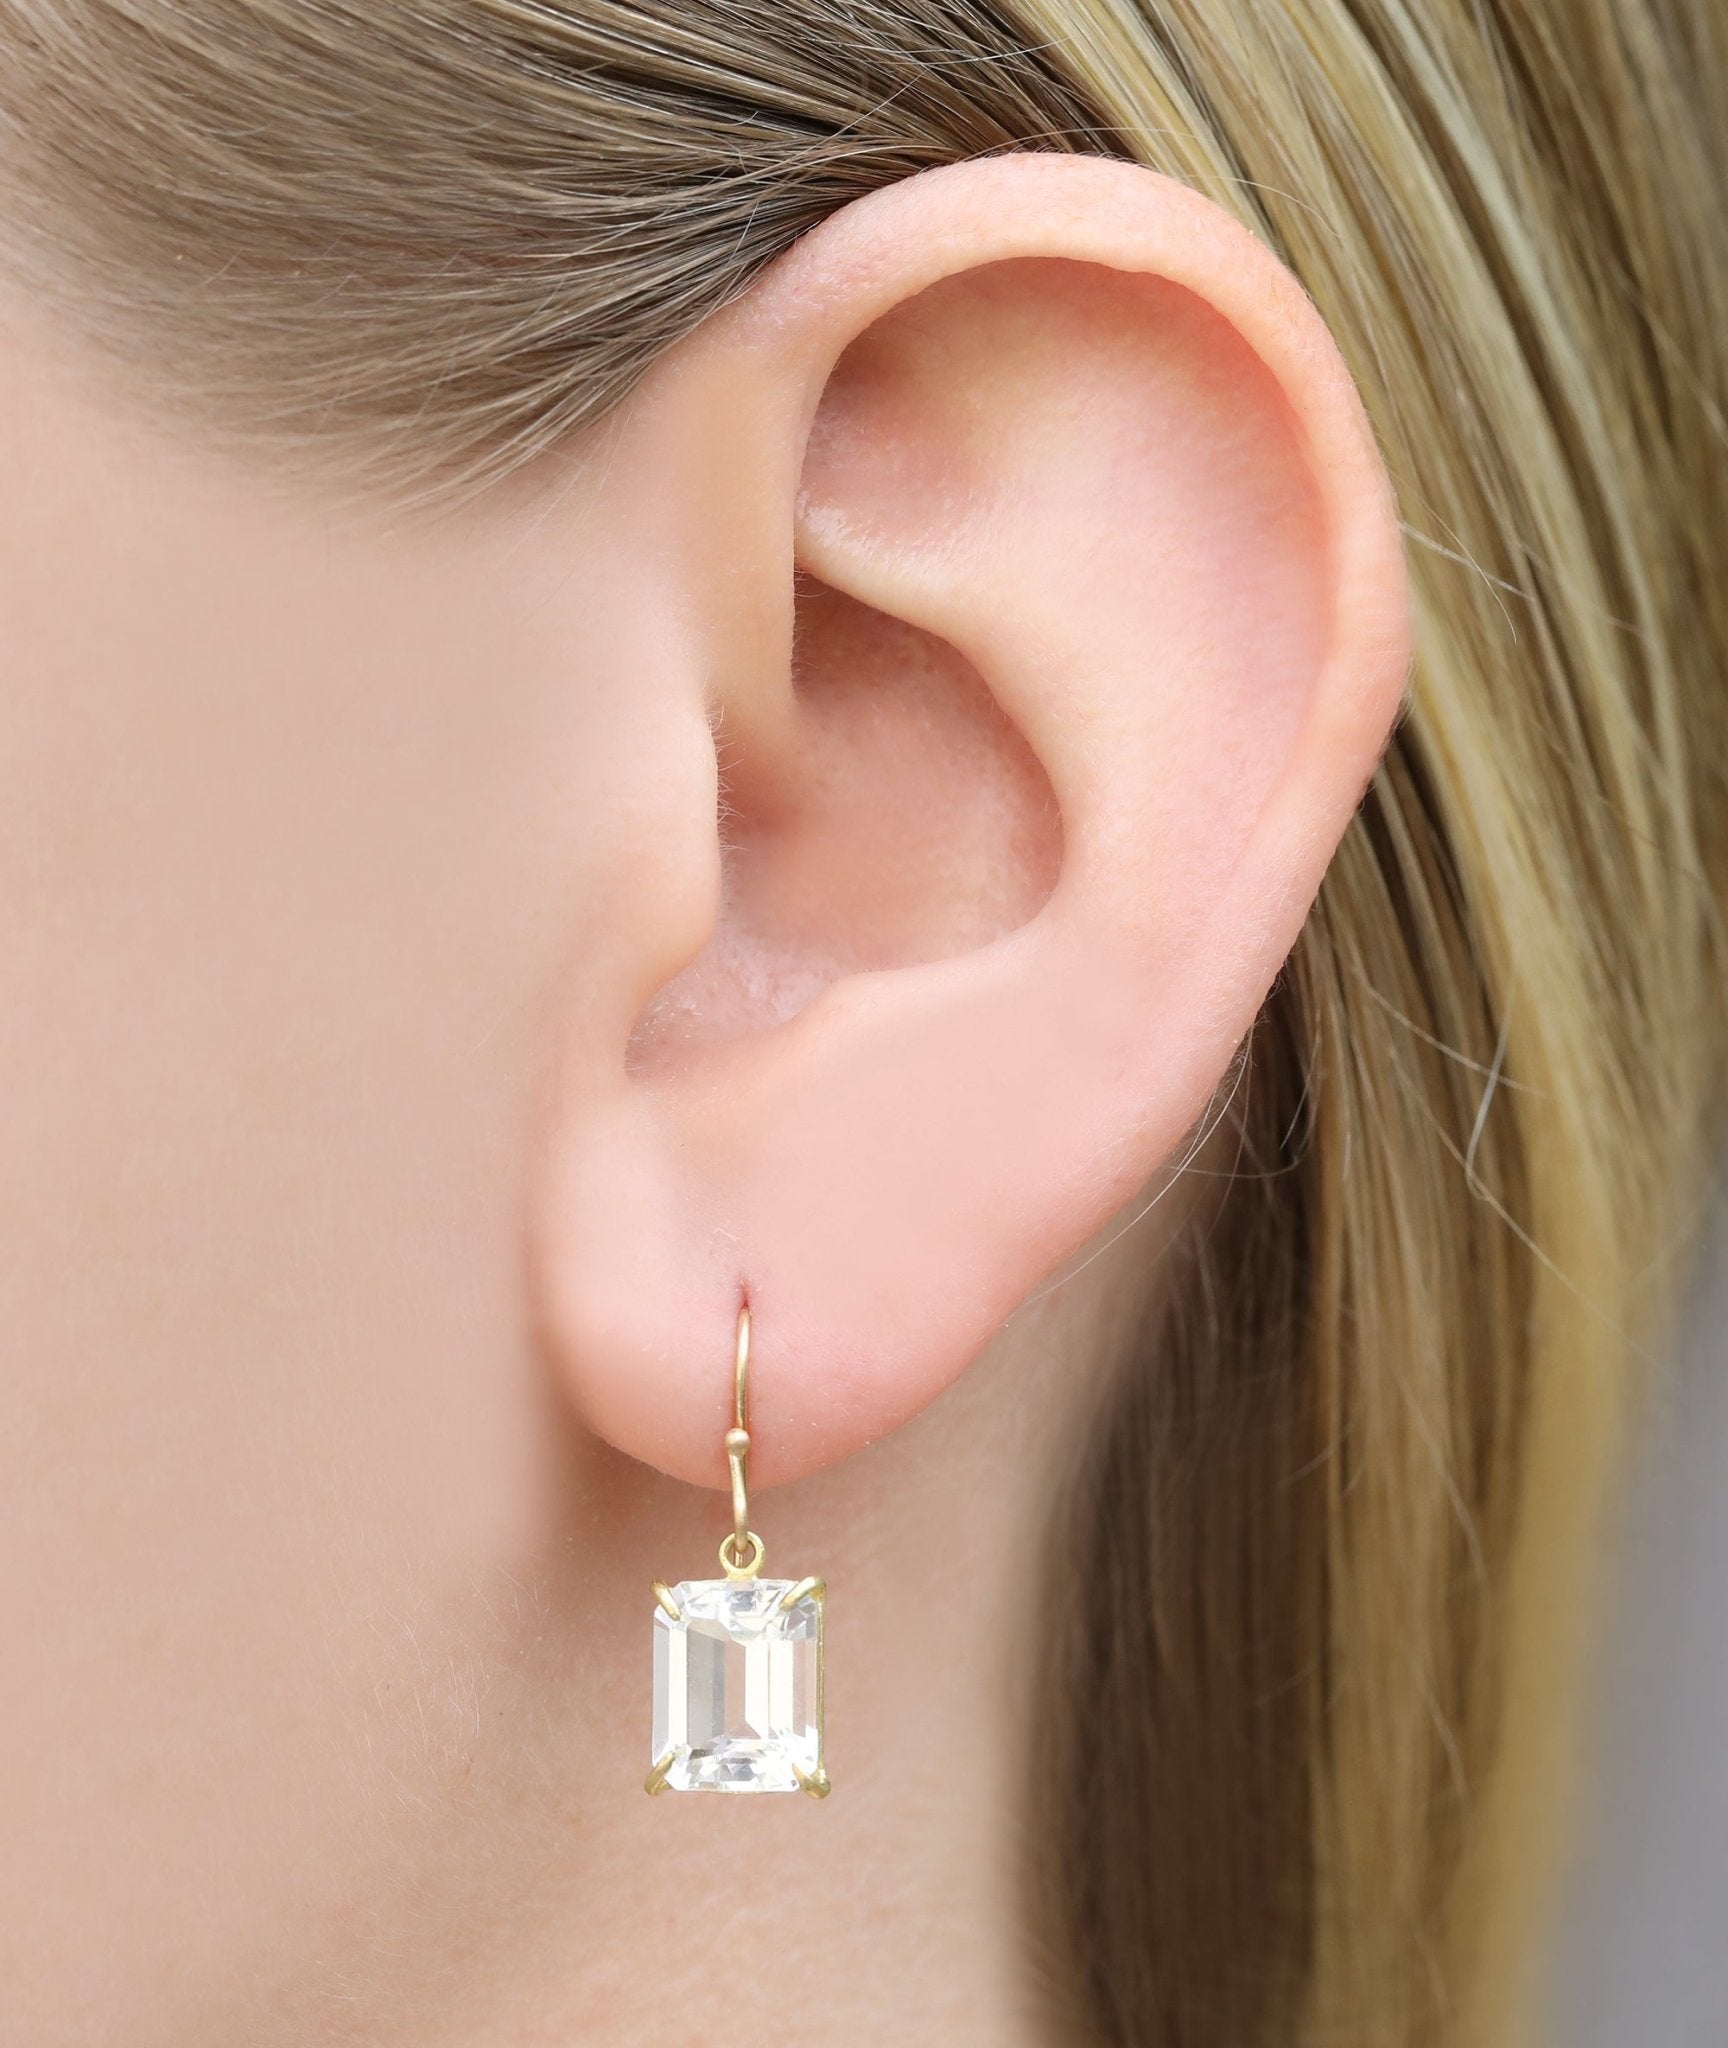 Rosanne Pugliese White Topaz Emerald Cut Earrings